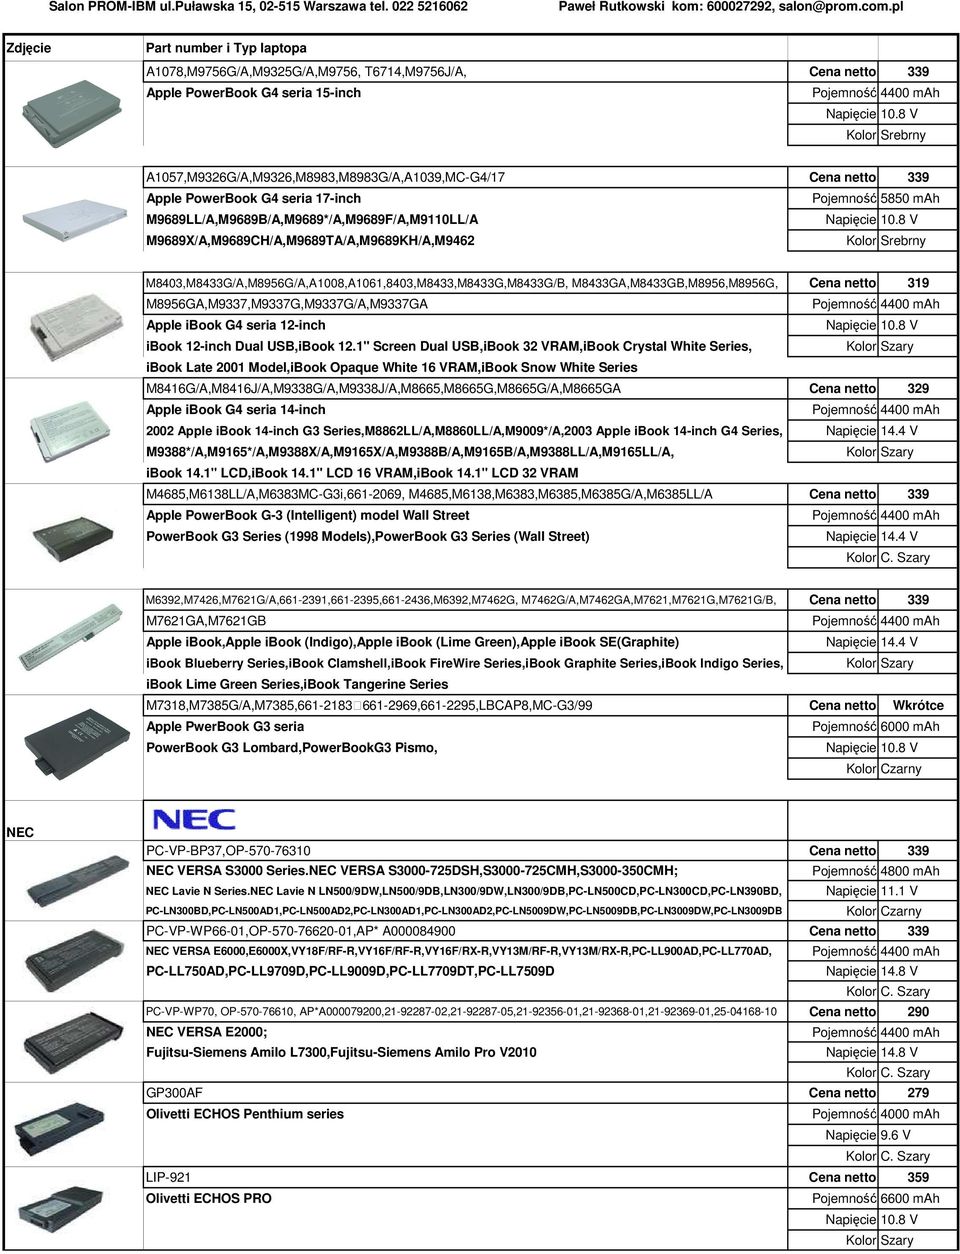 M8433GA,M8433GB,M8956,M8956G, Cena netto 319 M8956GA,M9337,M9337G,M9337G/A,M9337GA Apple ibook G4 seria 12-inch ibook 12-inch Dual USB,iBook 12.